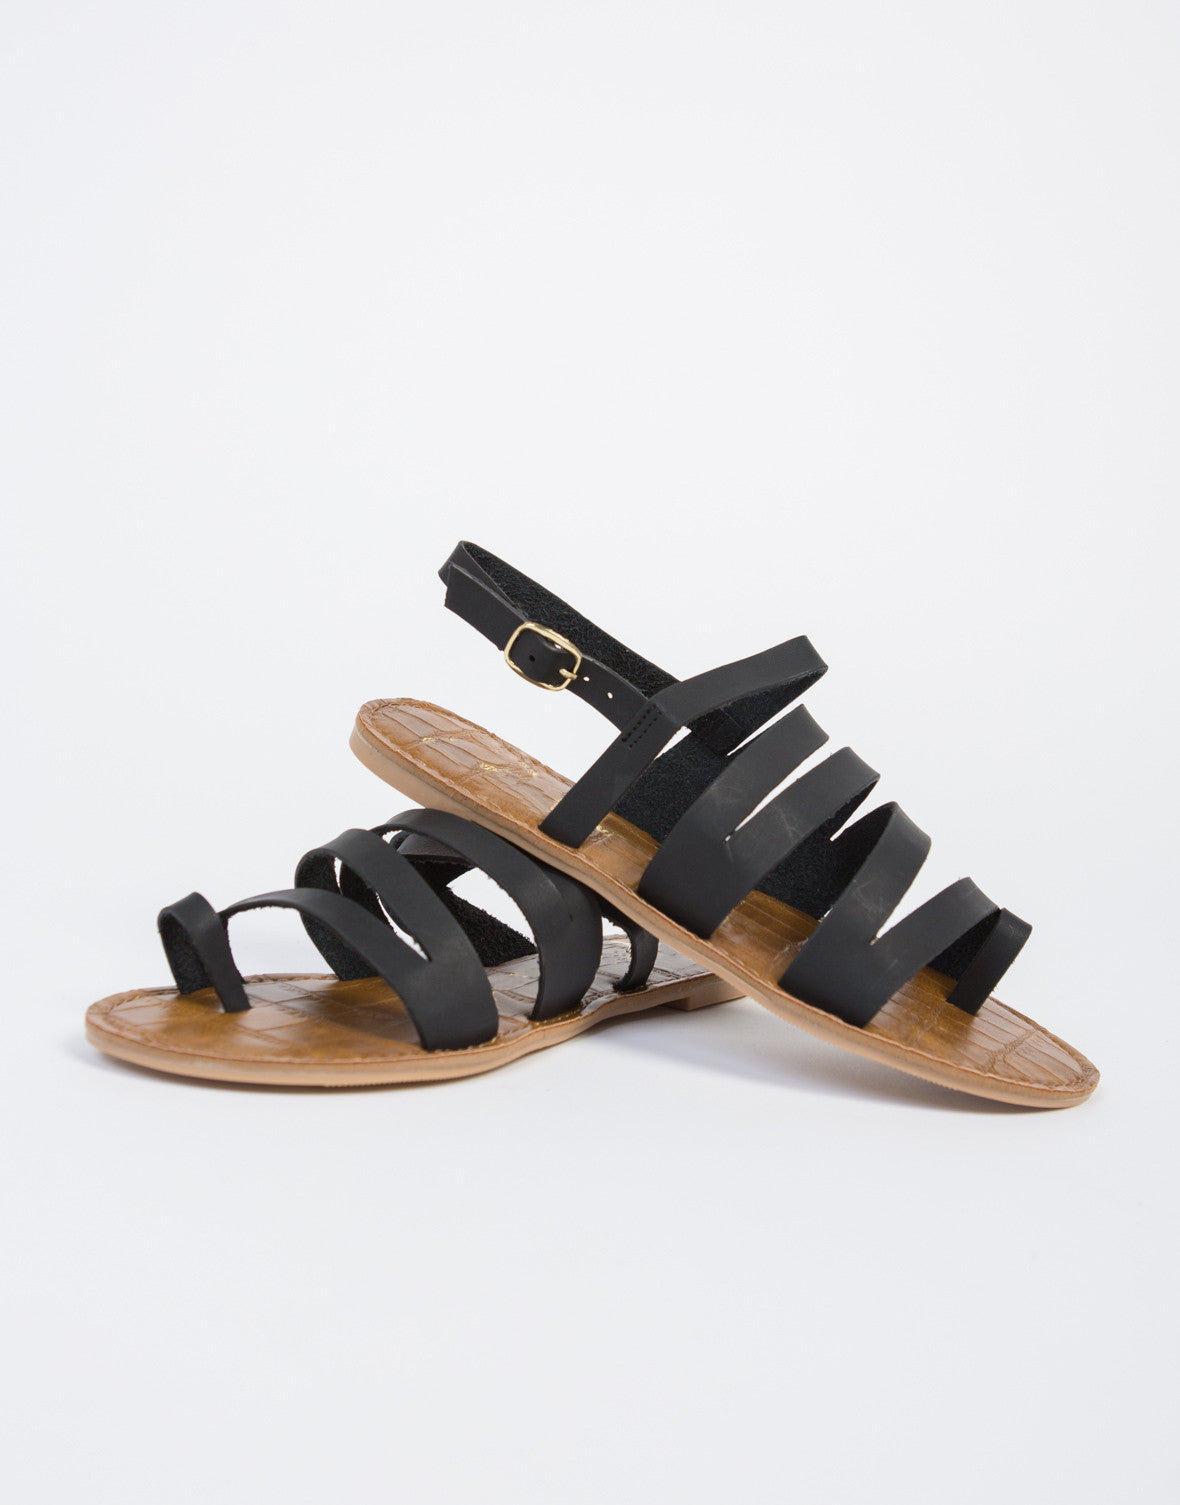 Zig Zag Strappy Sandals - Leather Gladiator Sandals - Black Sandals ...